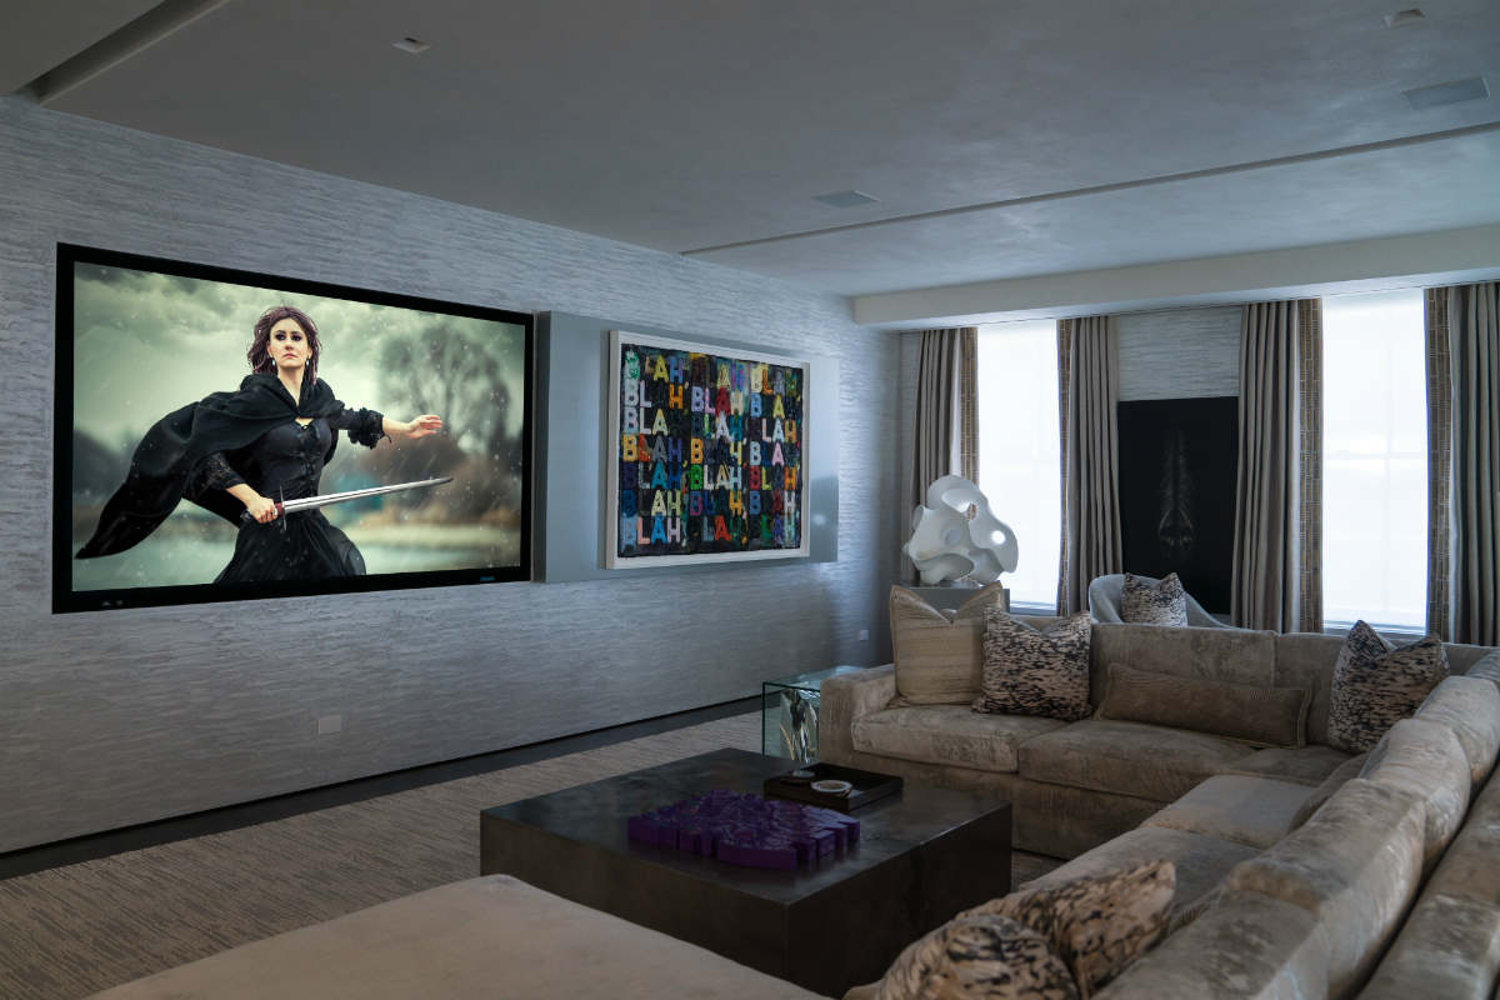 https://www.projectorscreen.com/Shared/blog/Home%20theater%20design/living-room-home-theater.jpg